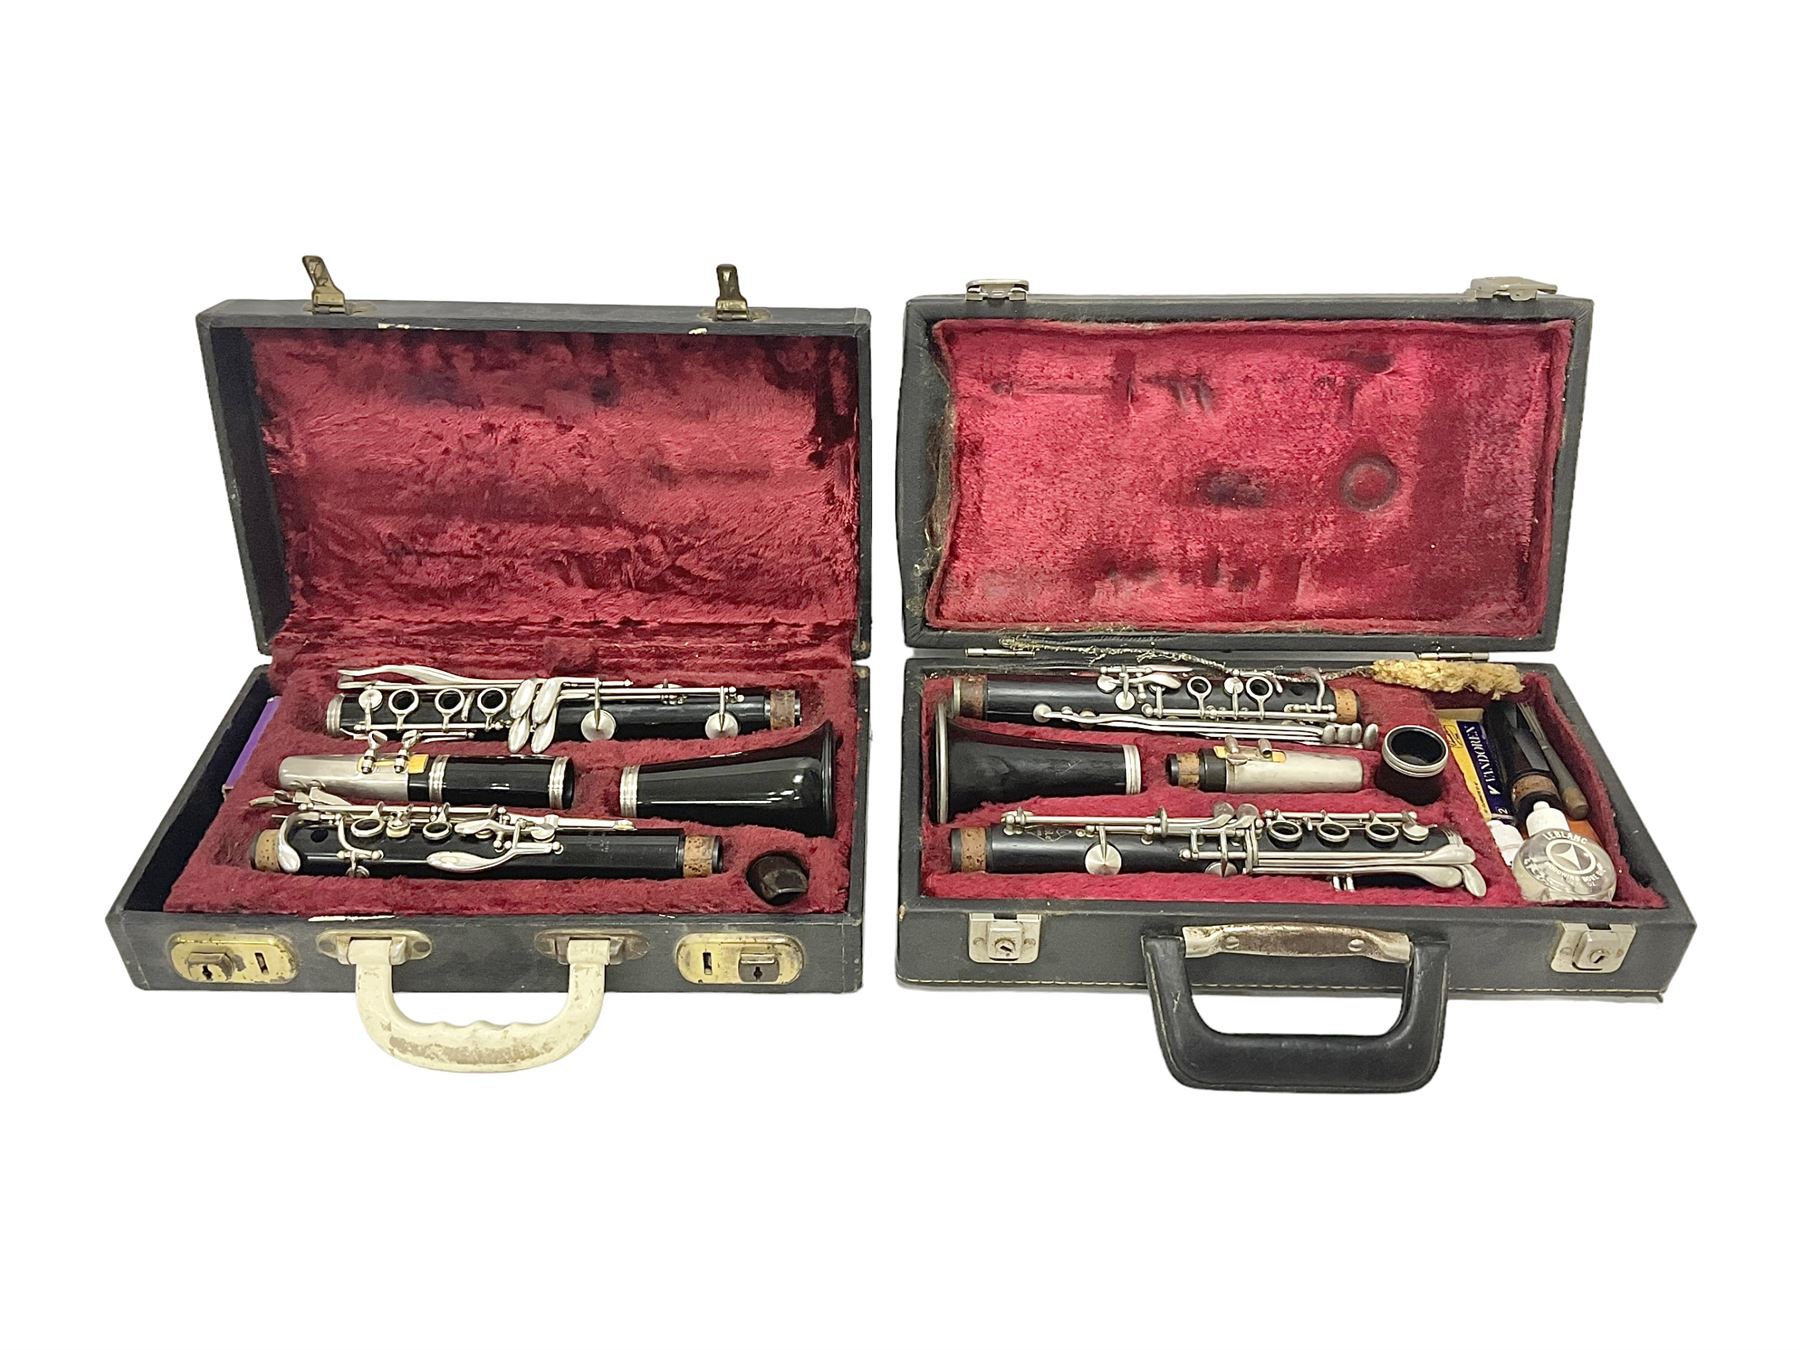 Boosey & Hawkes Regent B flat ebonite clarinet